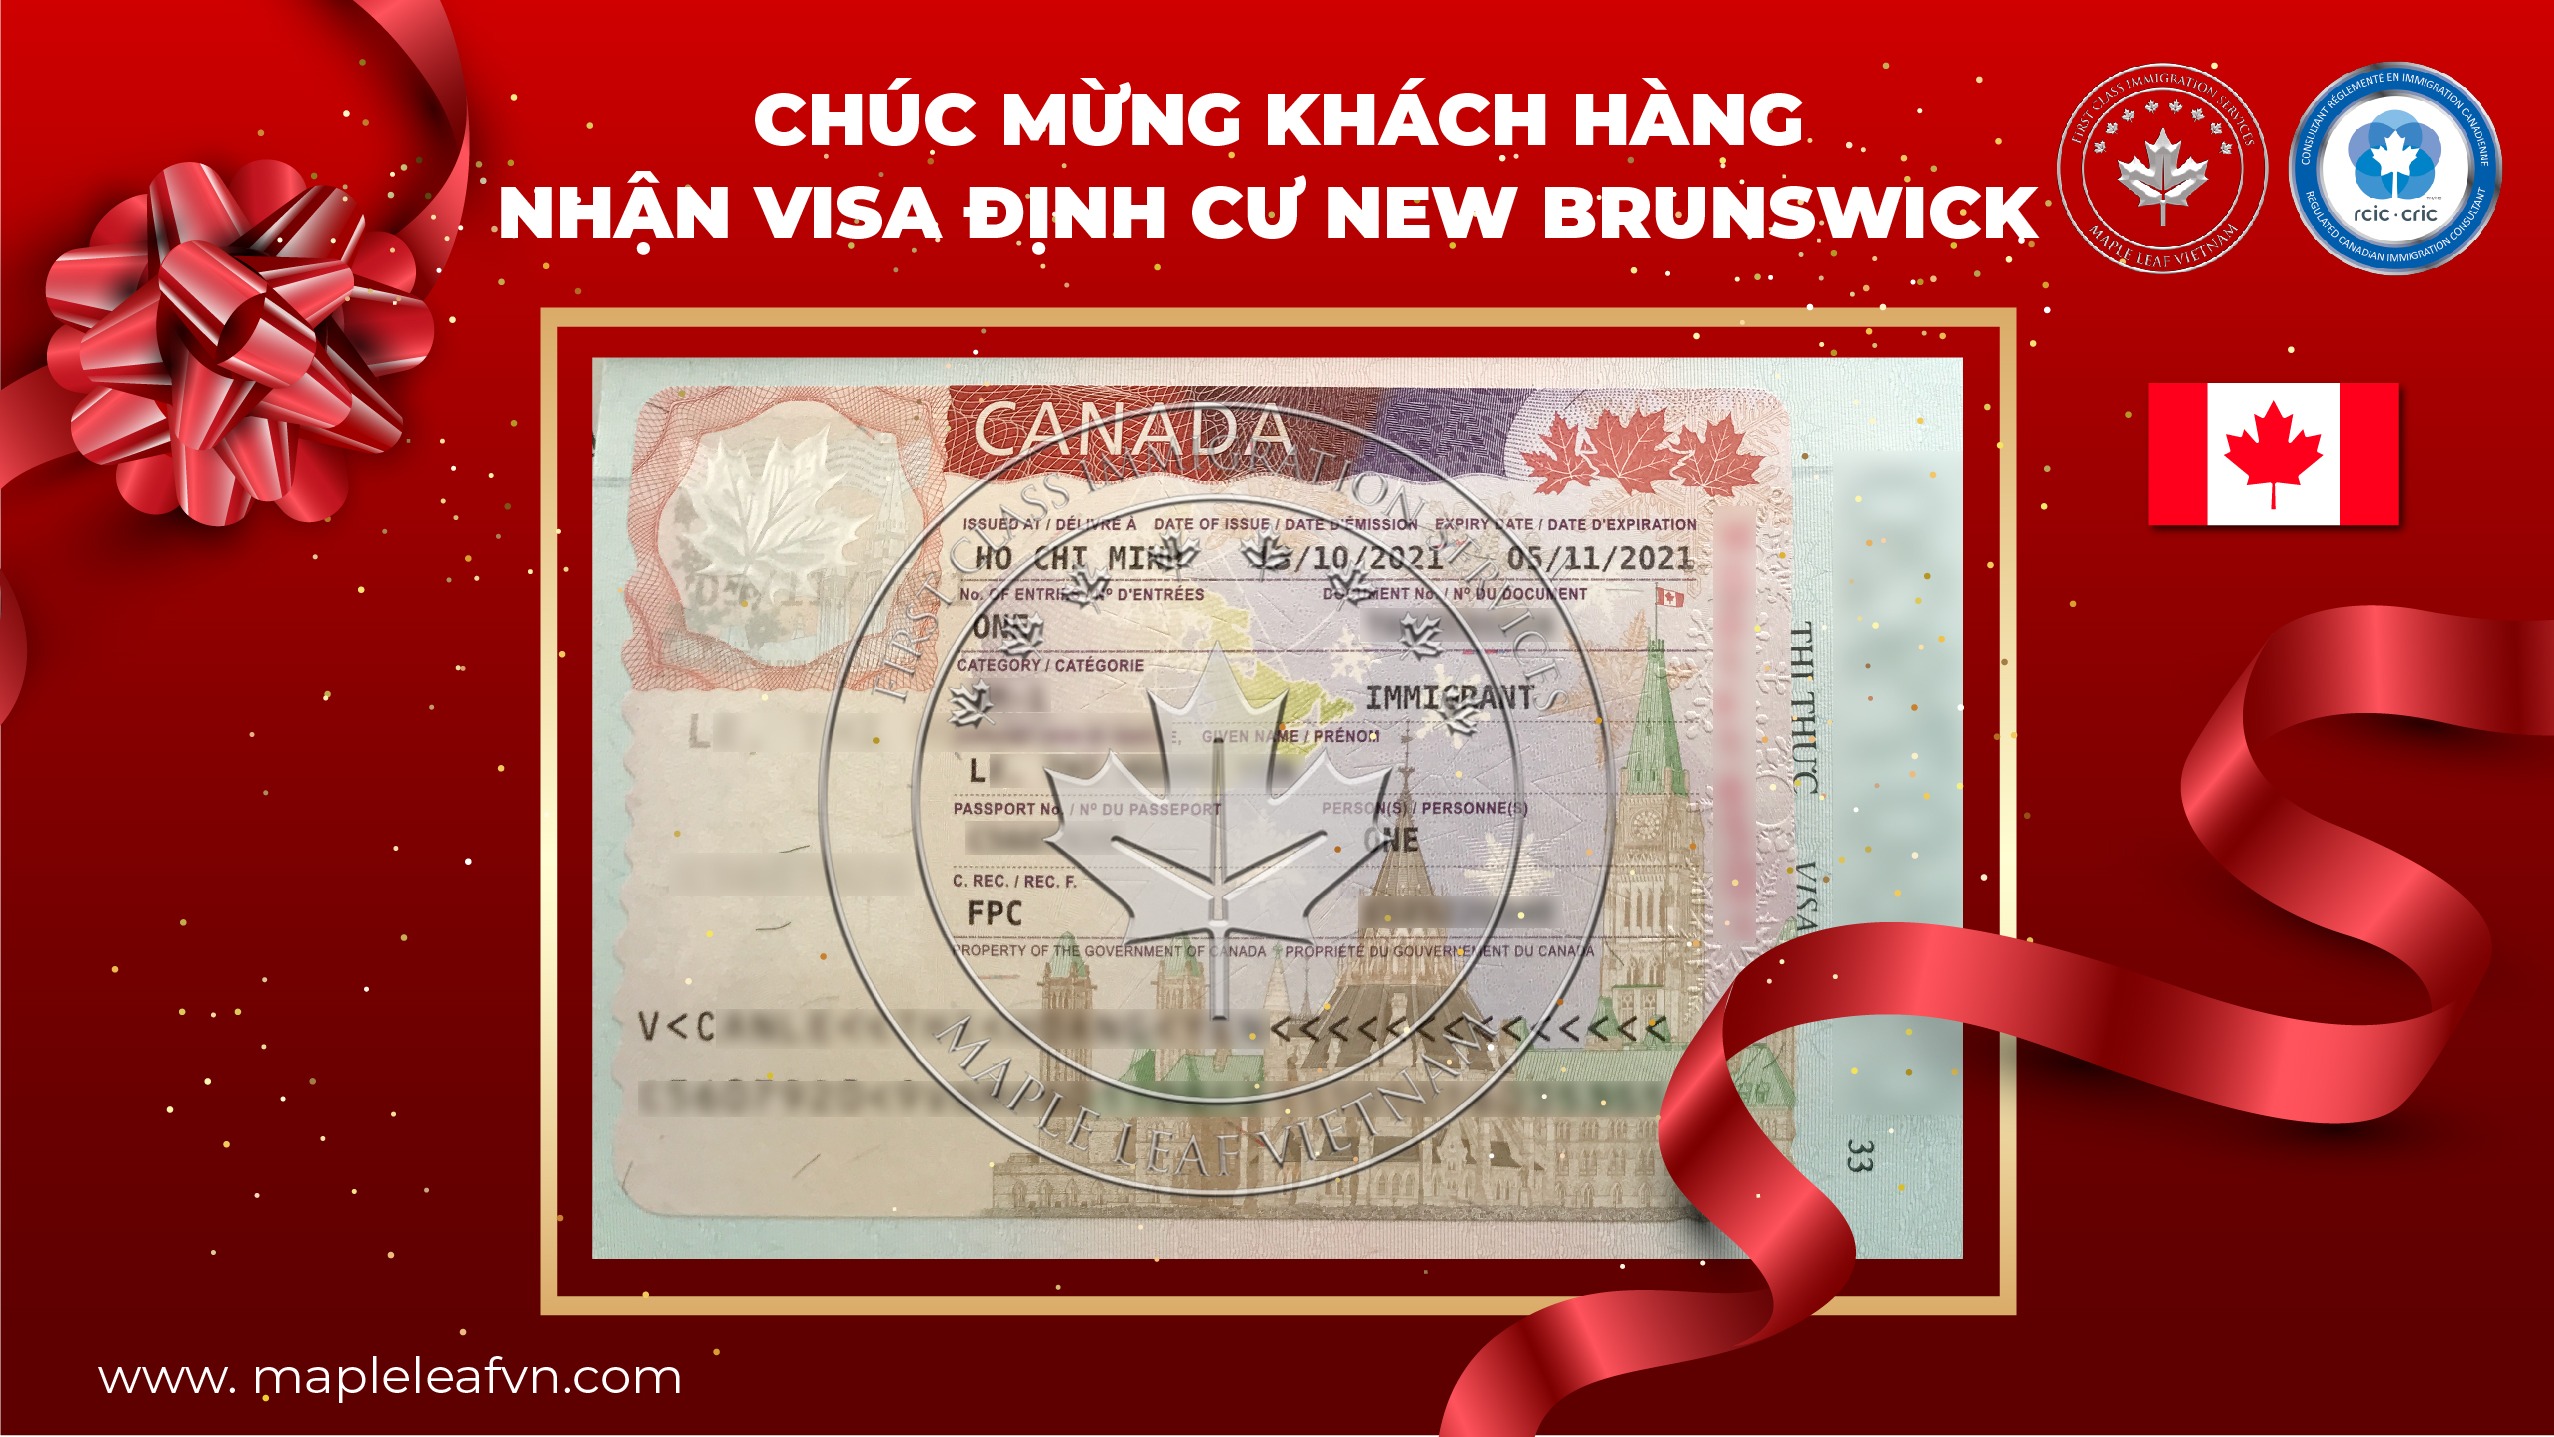 chuc-mung-khach-hang-nhan-visa-dinh-cu-new-brunswick